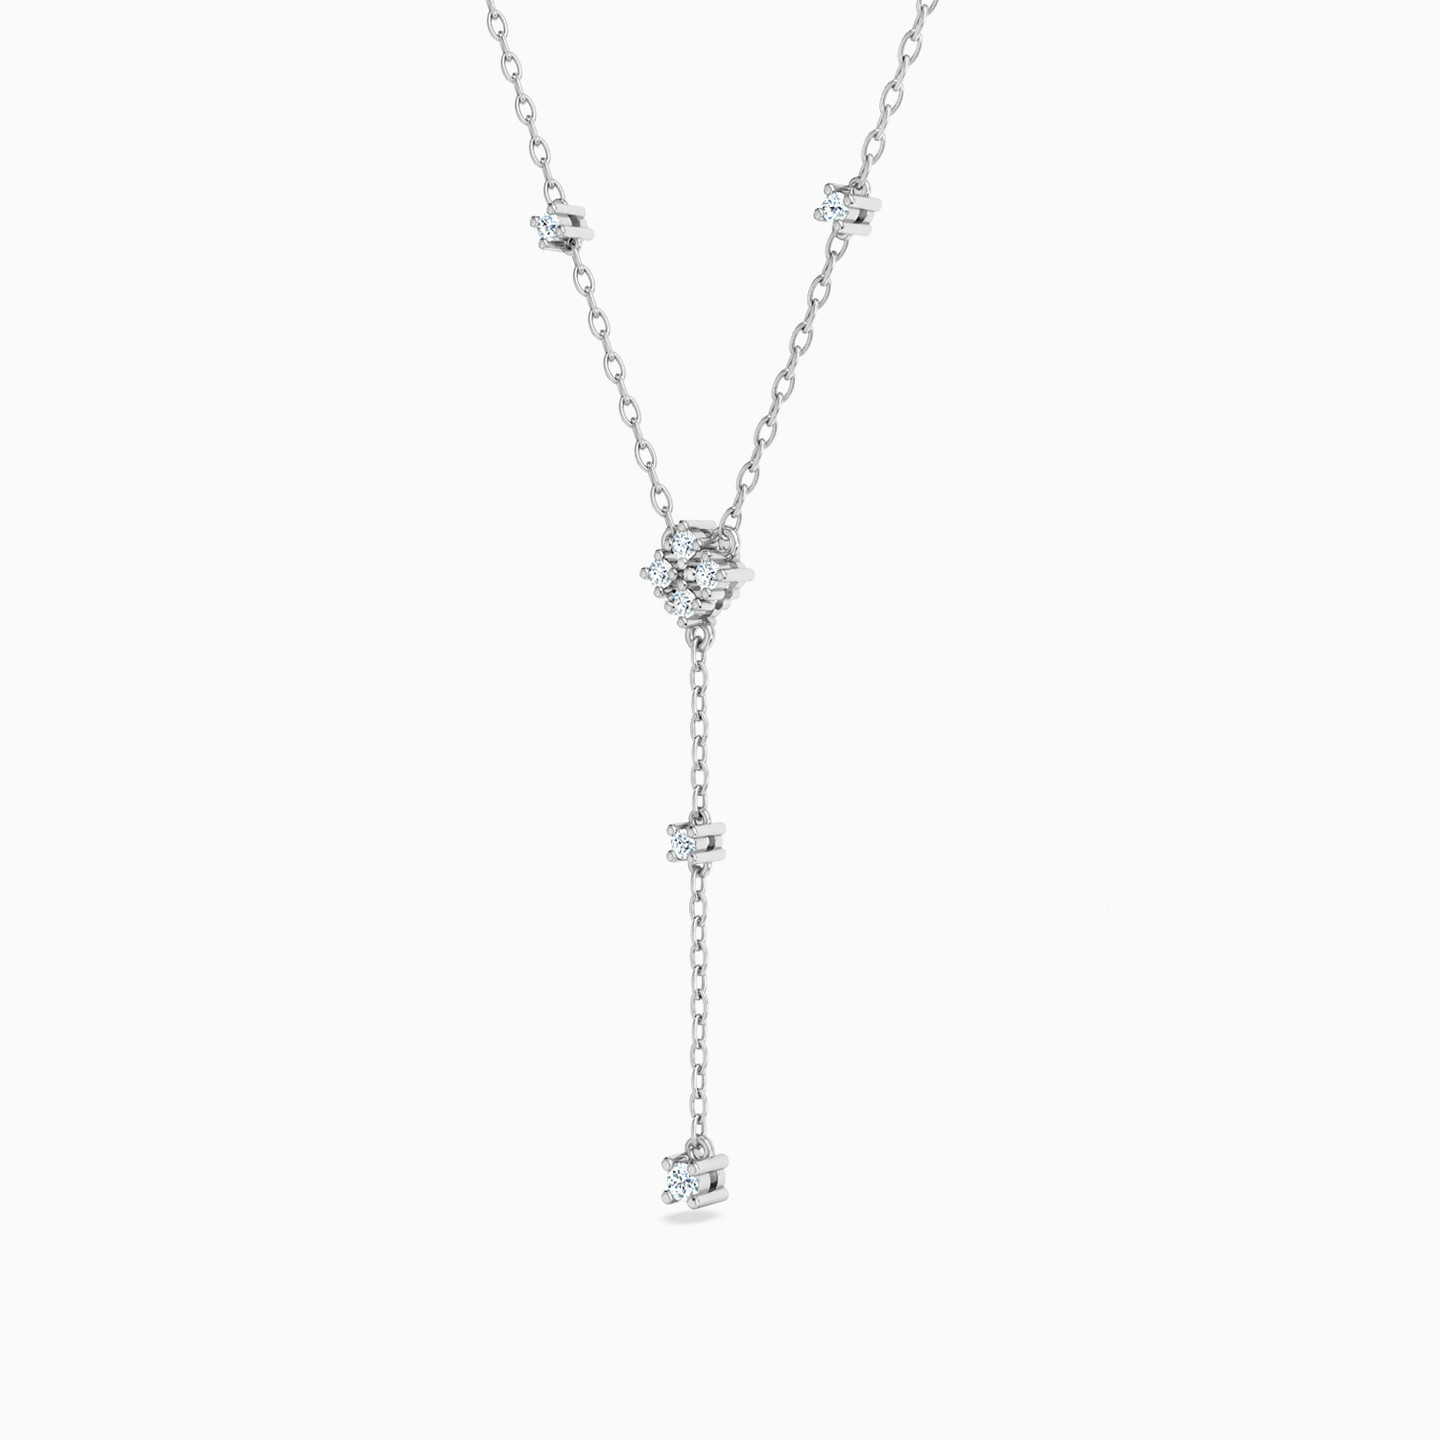 18K Gold Diamond Drop Pendant Necklace - 2